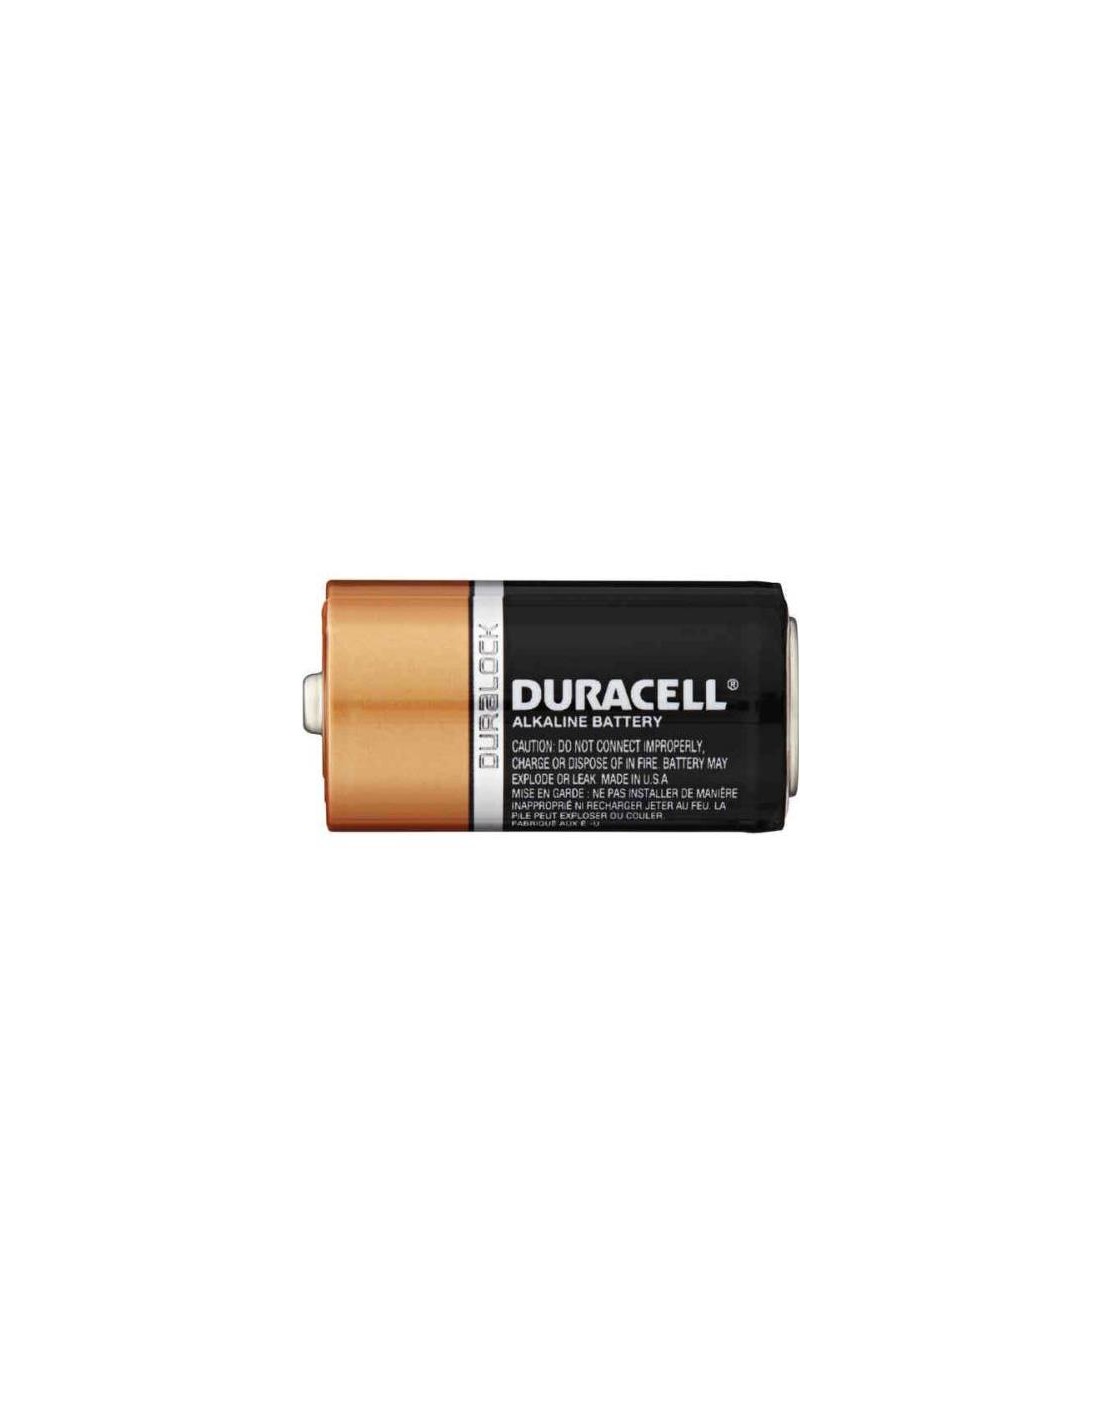 Duracell C Coppertop Alkaline Batteries model MN1400 - Non Rechargeable